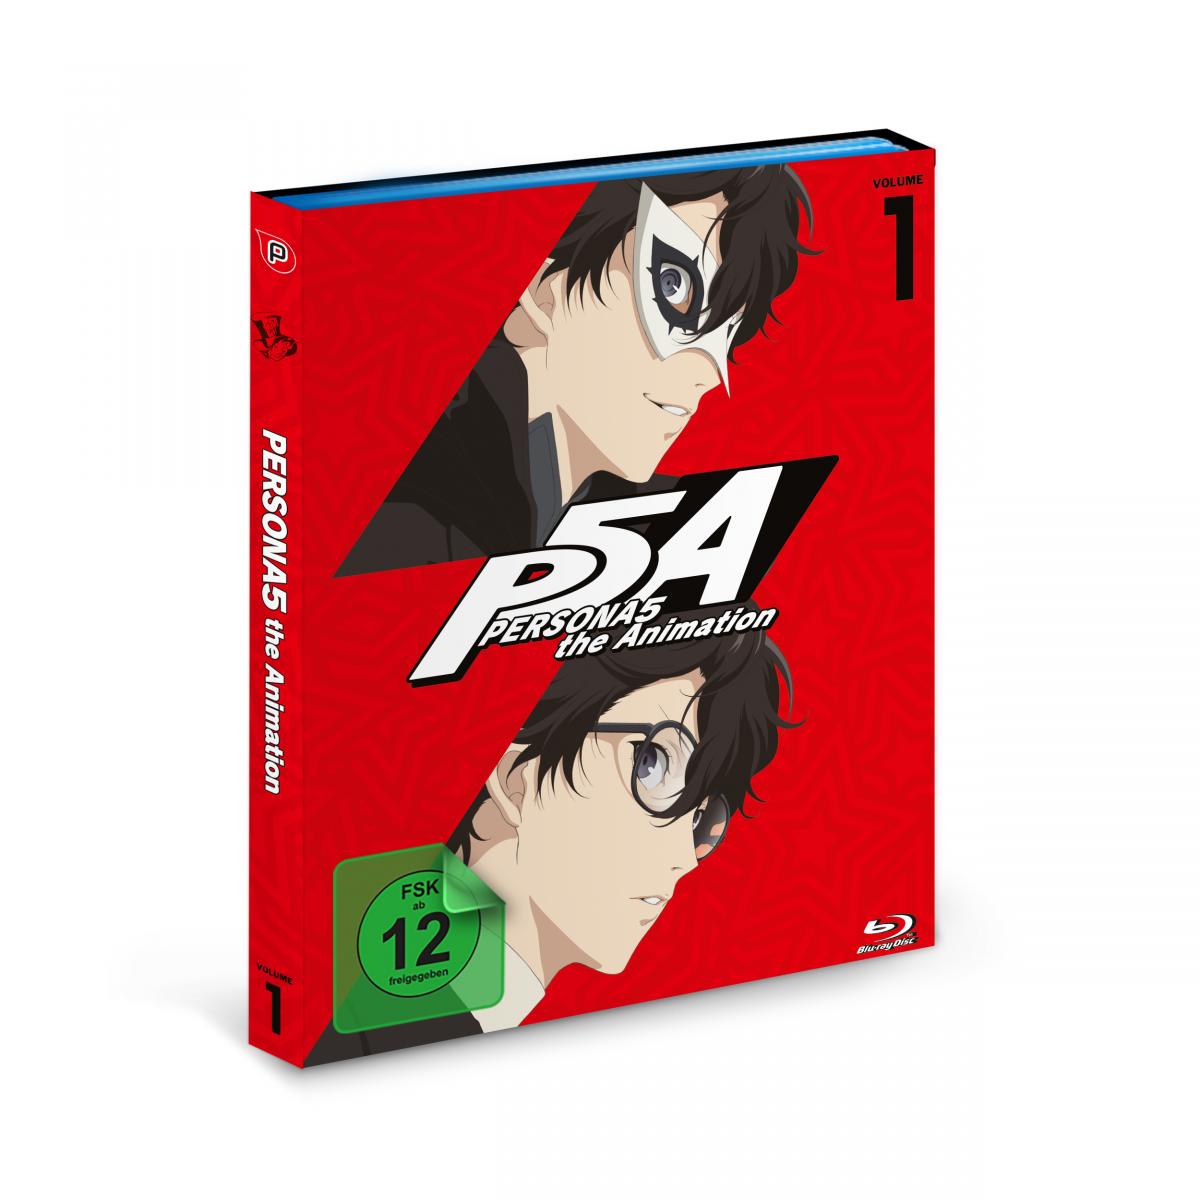 Persona5 - The Animation - Volume 1 Blu-ray Image 2